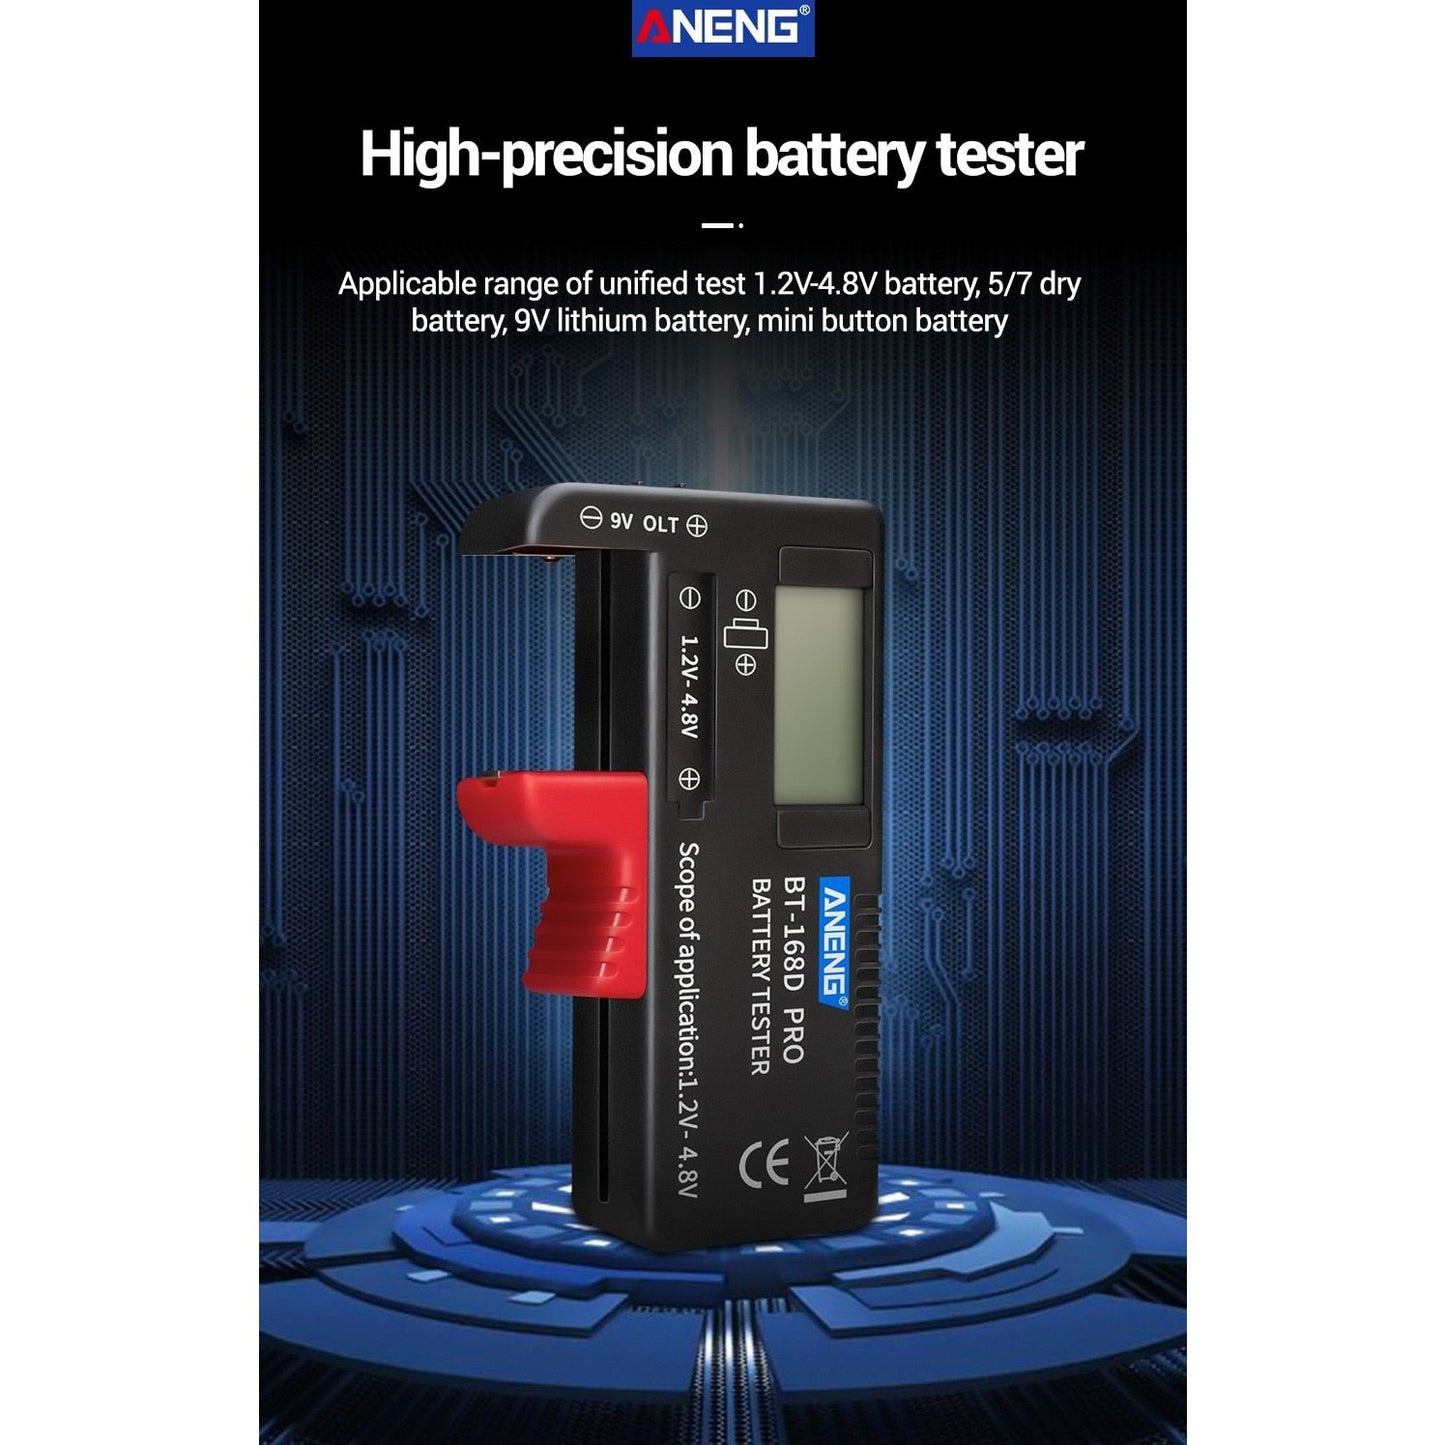 ANENG- AN-168 POR Digital Lithium Battery Capacity Tester Universal test.